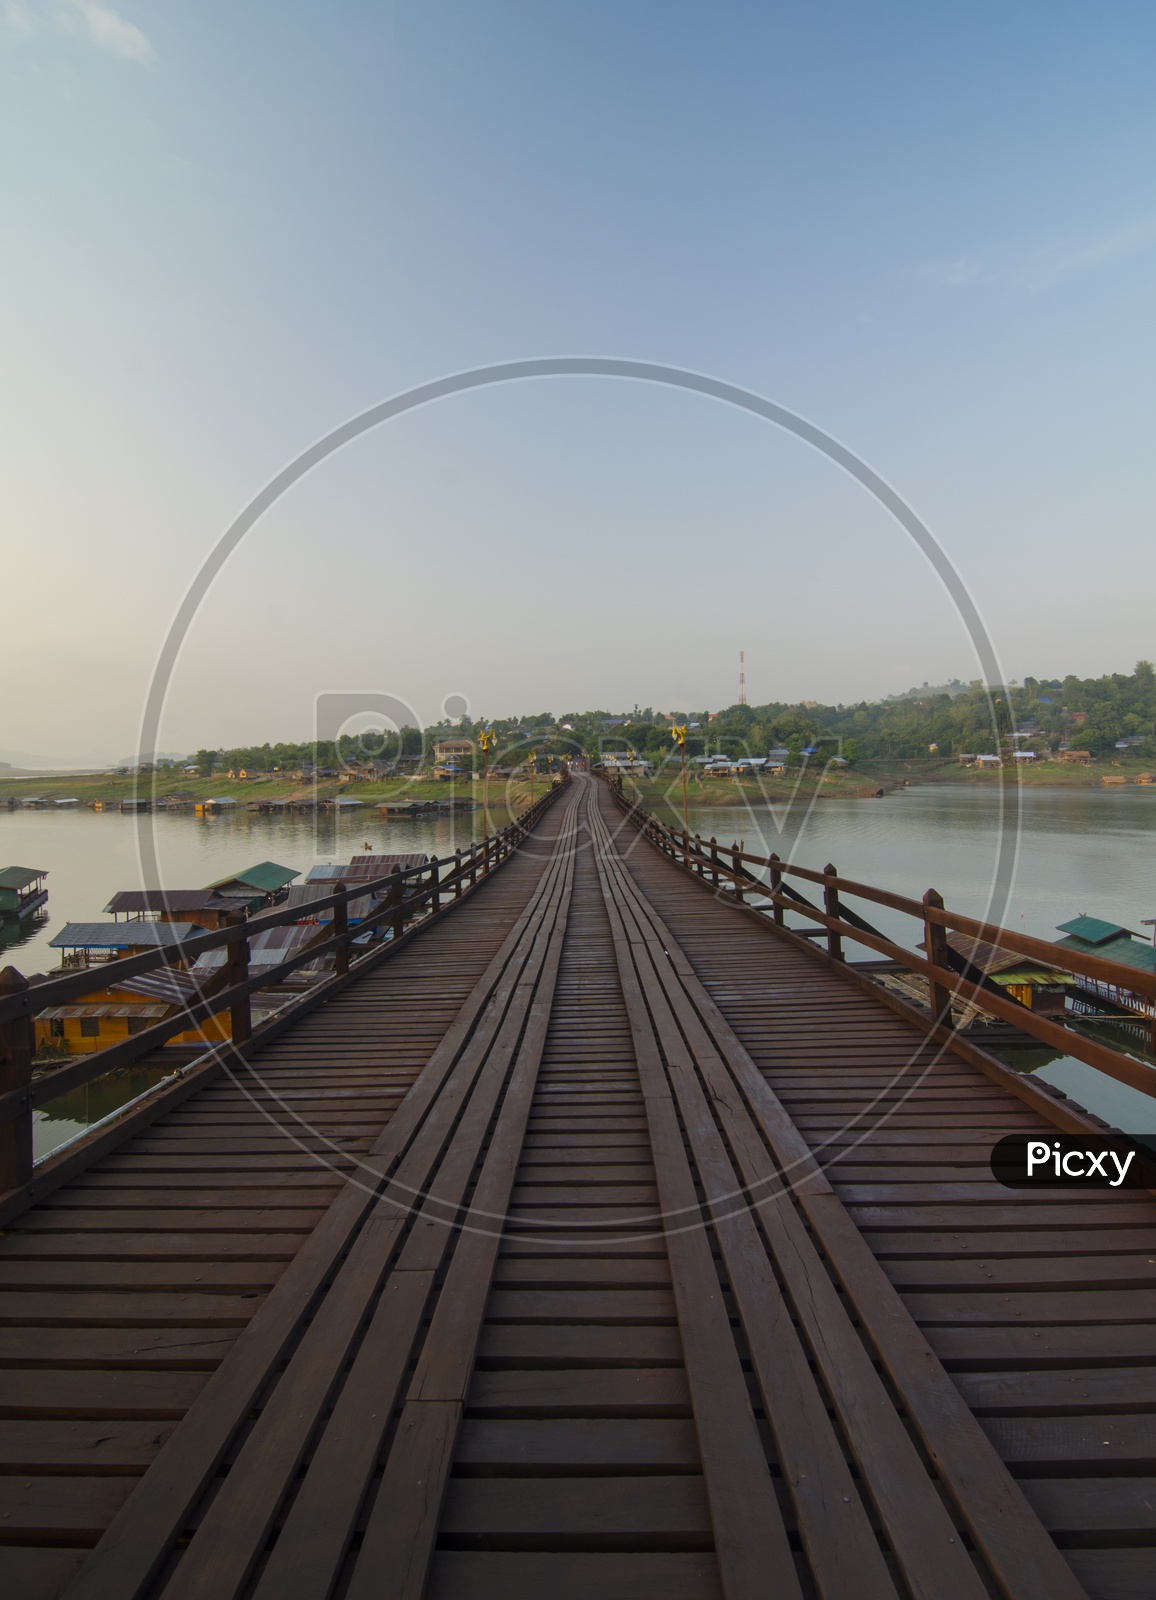 Longest wooden bridge in Thailand, at Sangkhlaburi, Kanchanaburi